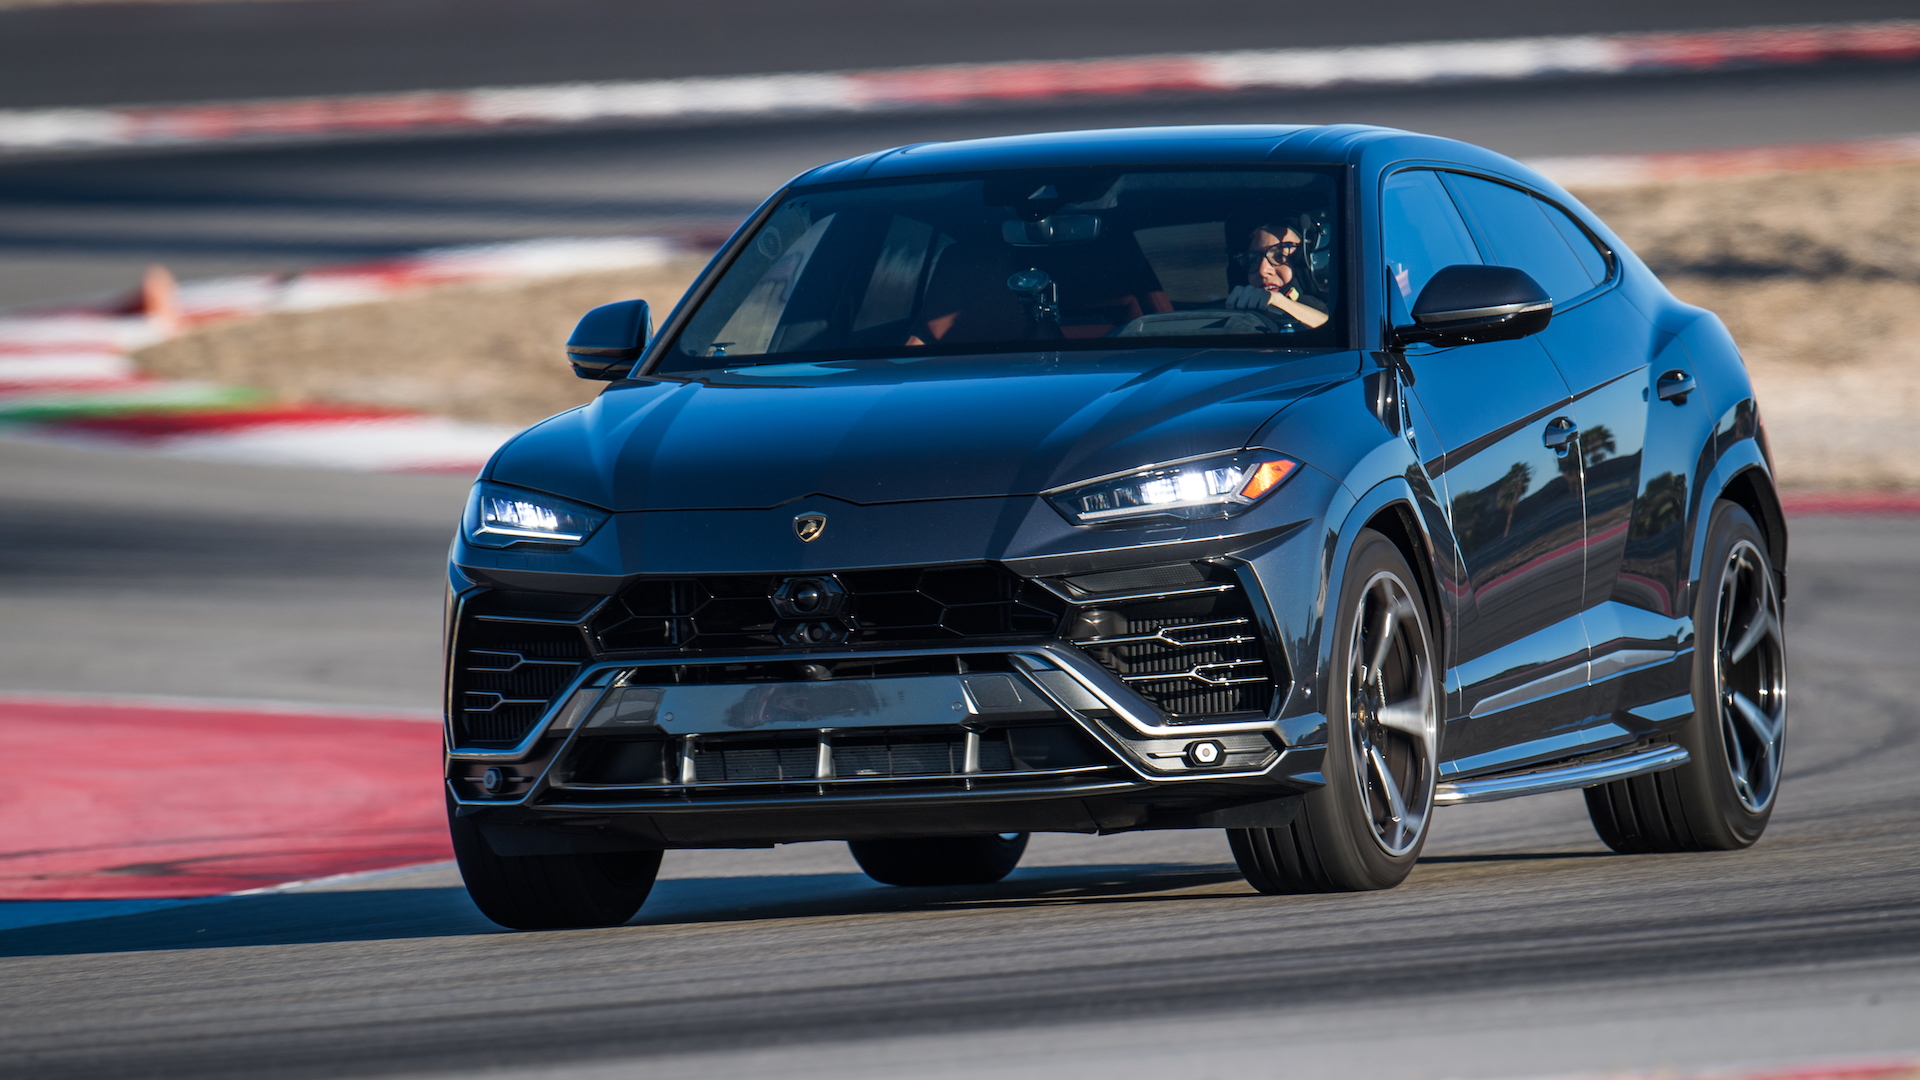 2019 Lamborghini Urus, Palm Springs media drive, December, 2018